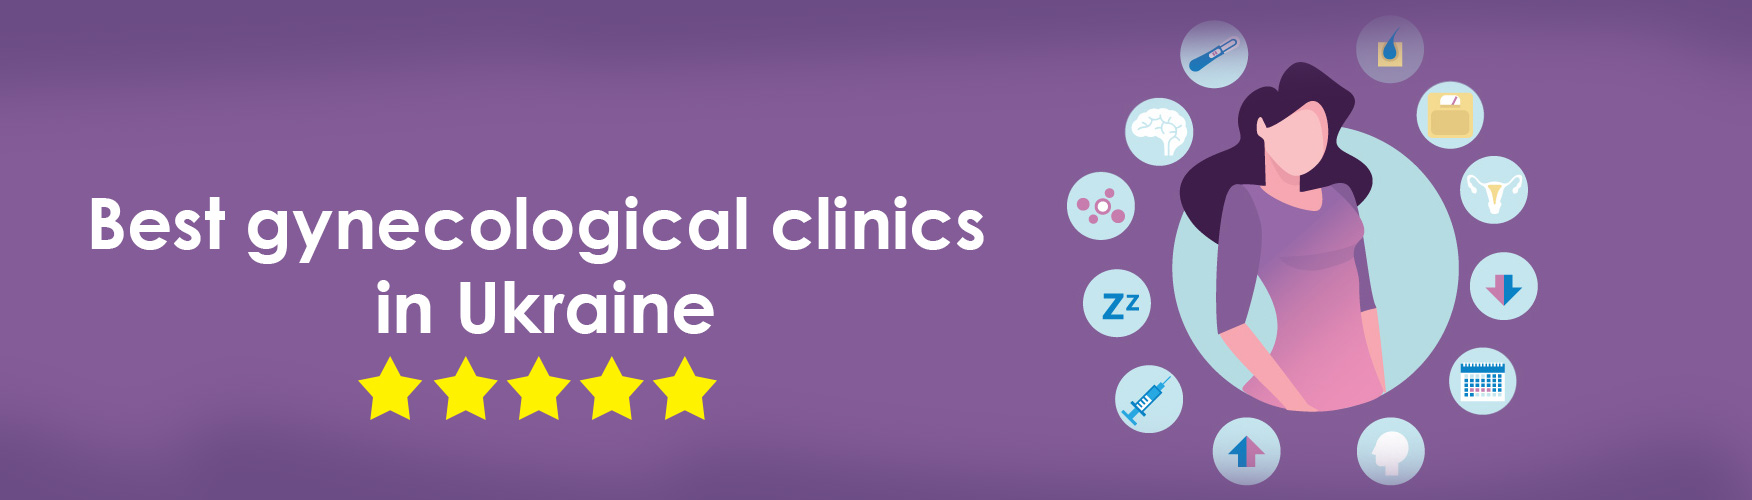 Best gynecological clinics in Ukraine